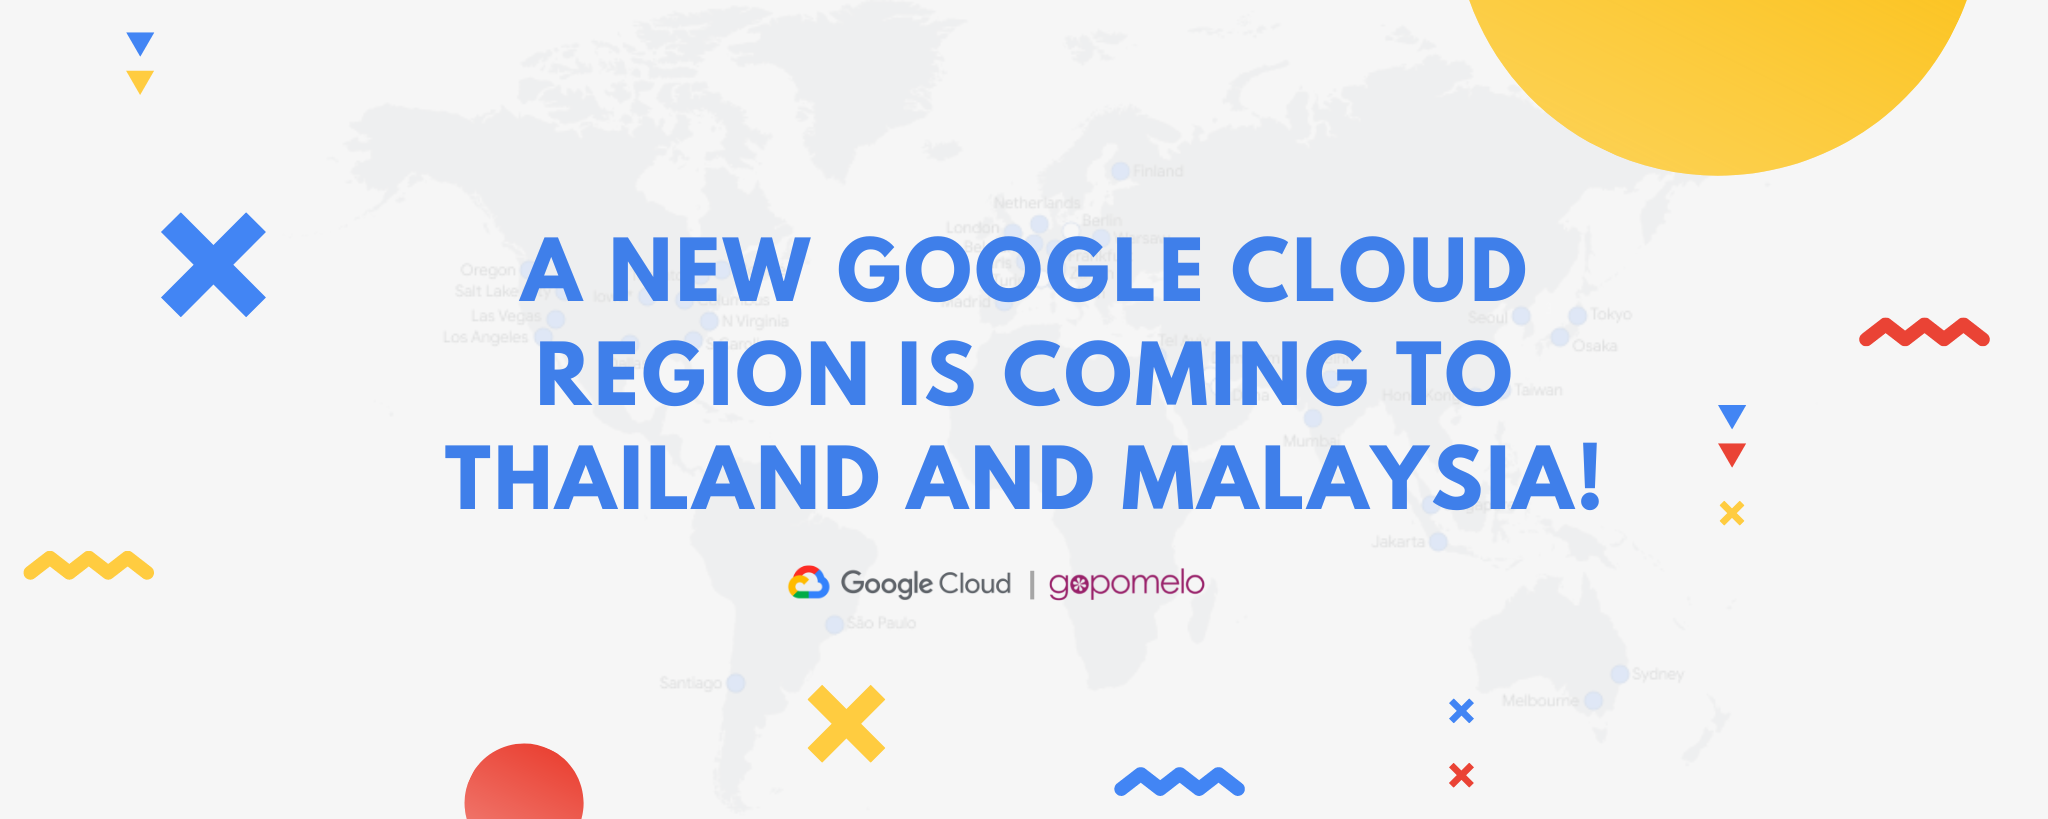 Google Cloud ประกาศขยาย Cloud Region ในประเทศไทย! | GoPomelo